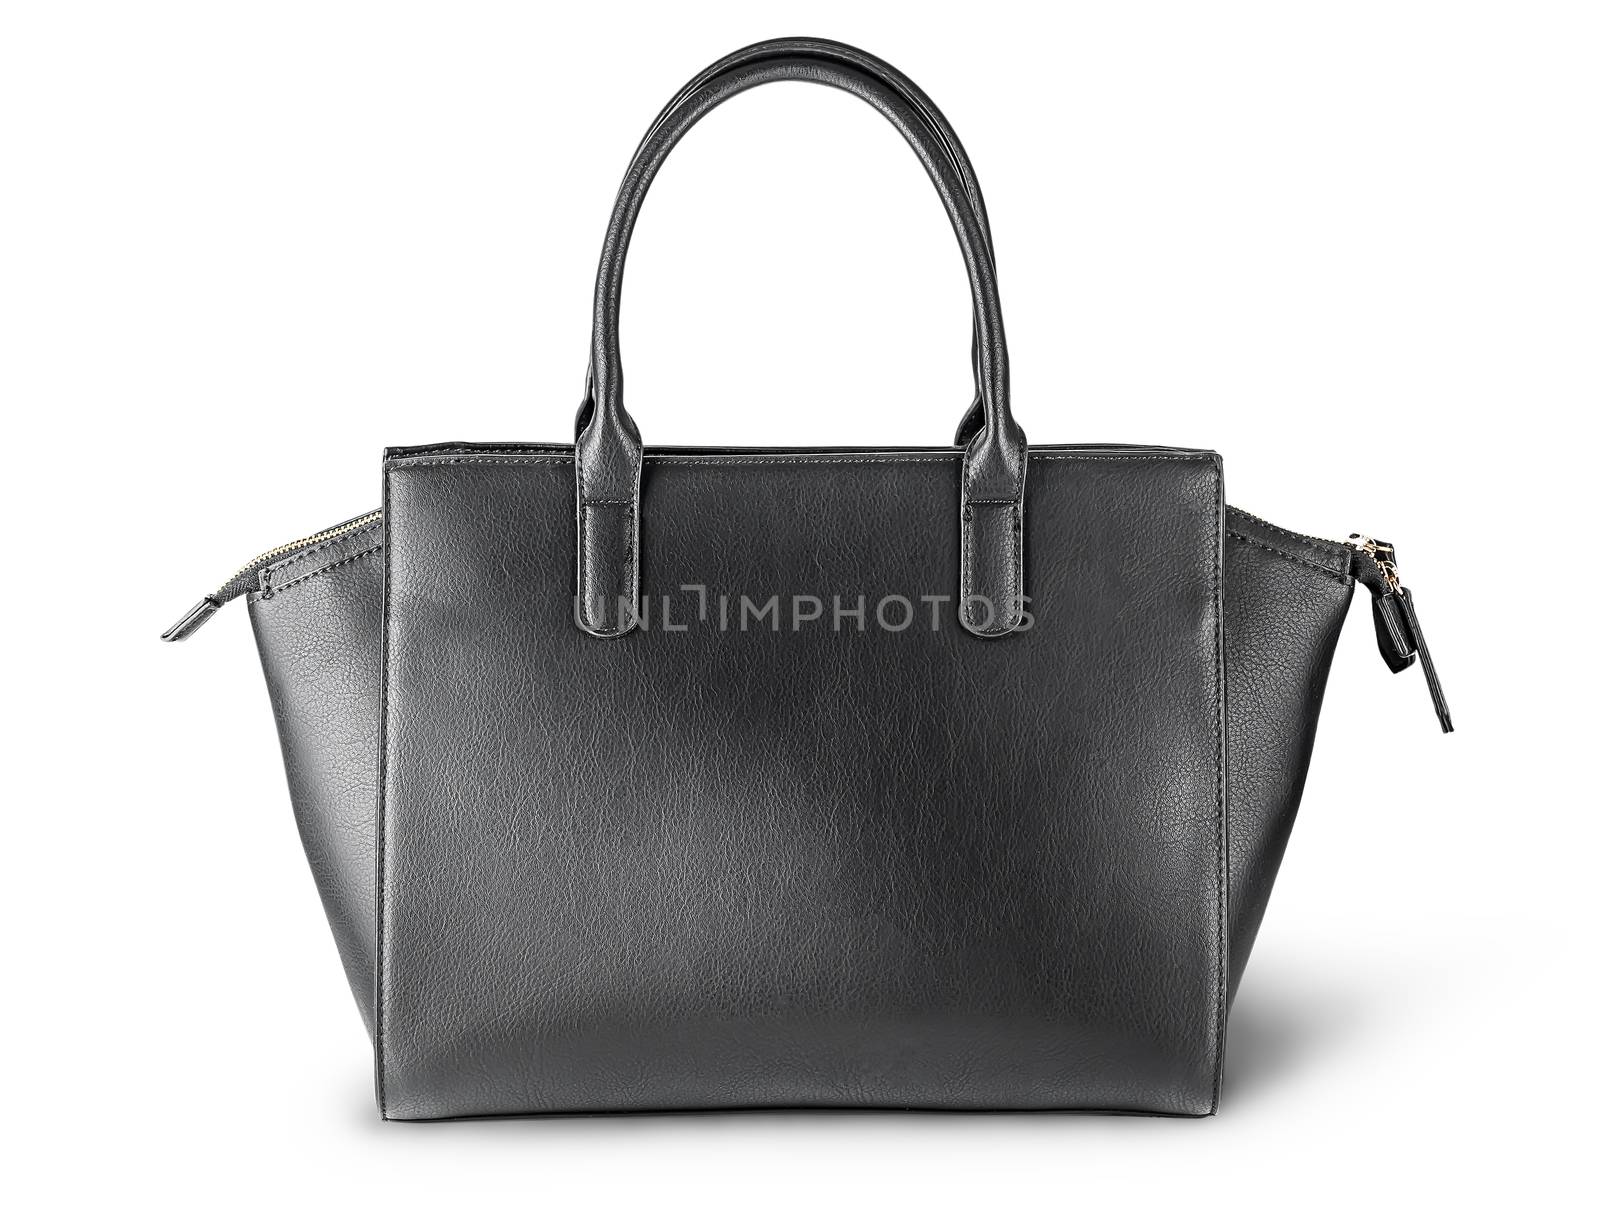 Ladies black leather bag back view by Cipariss